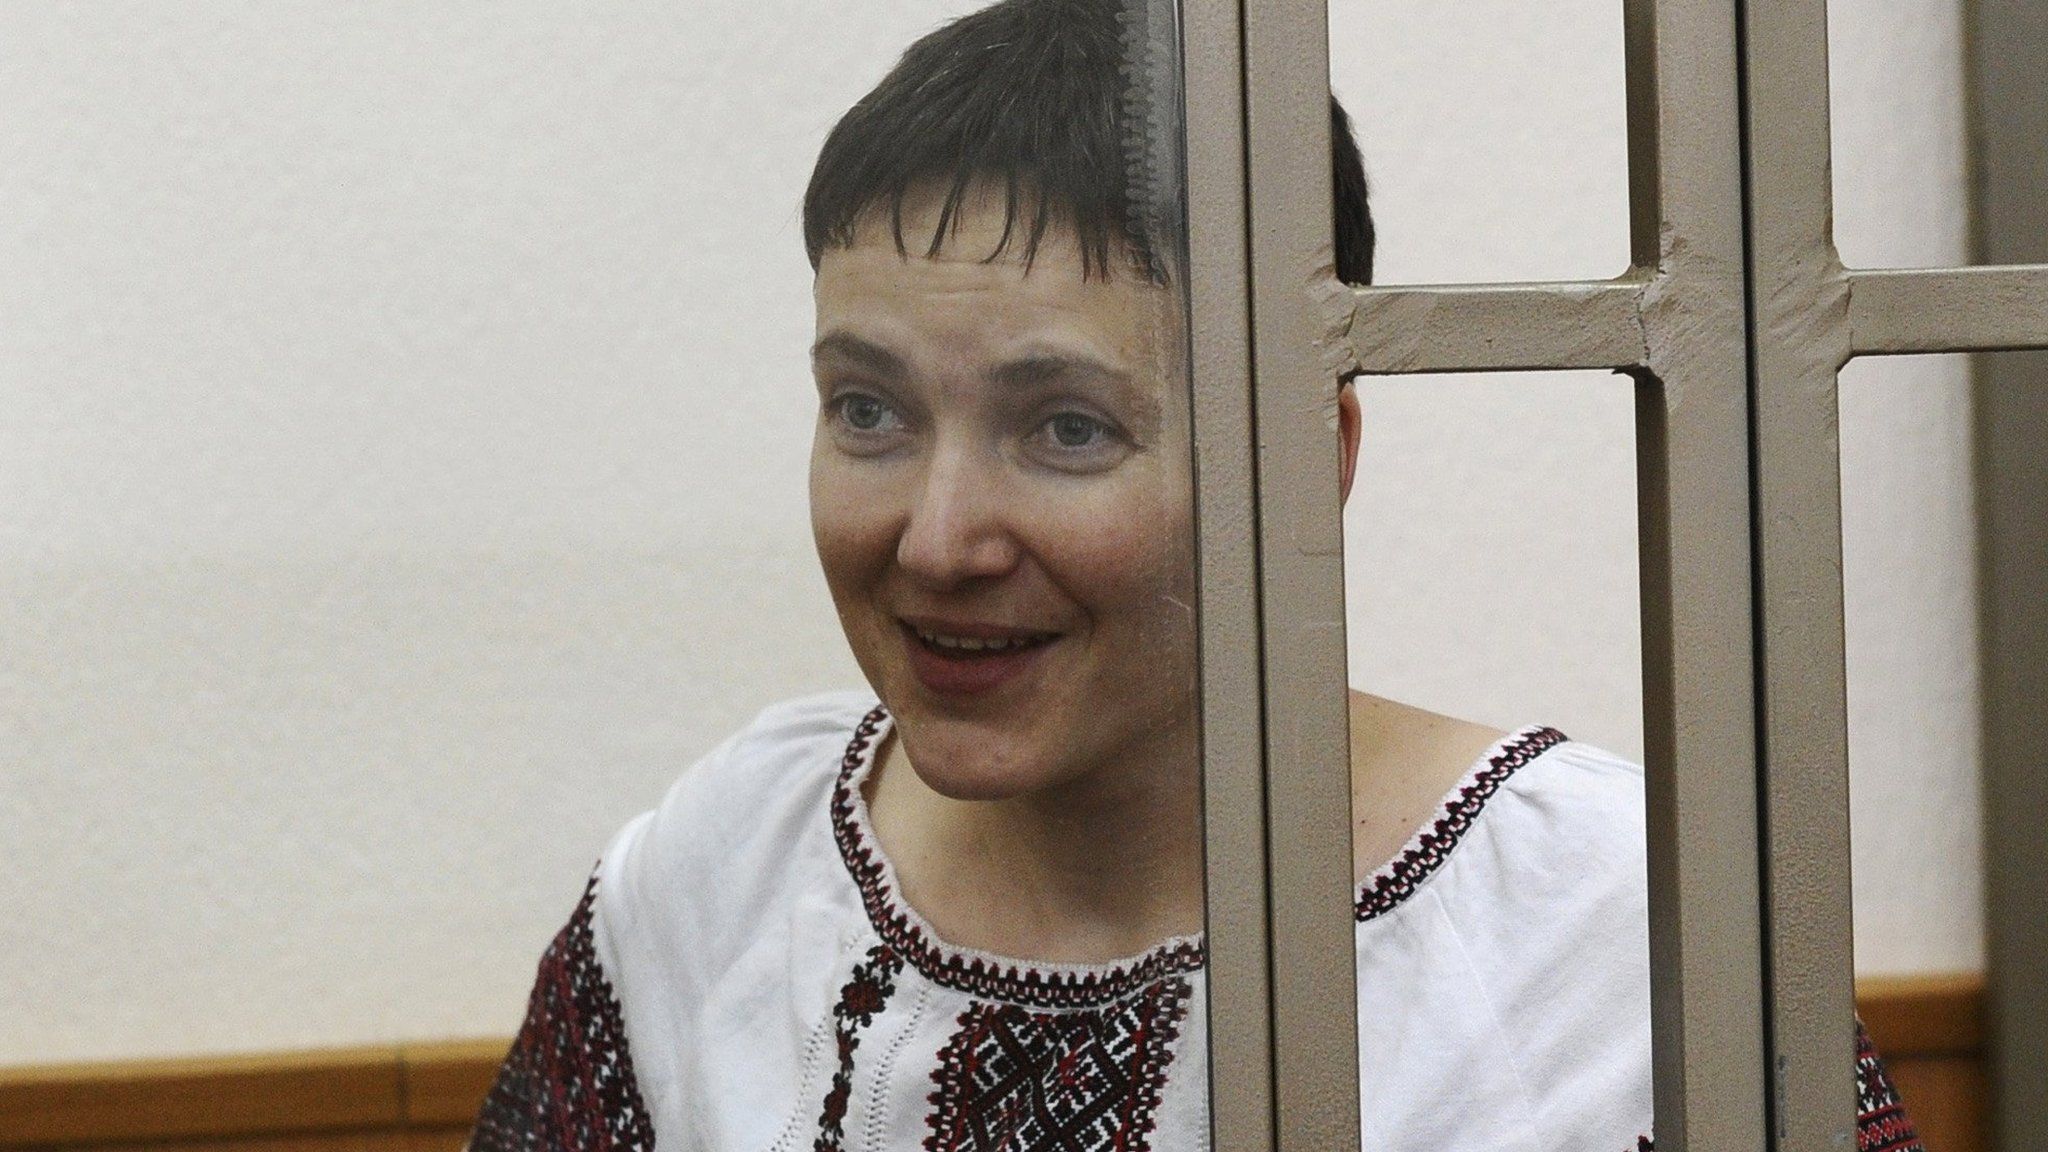 Nadia Savchenko in court in Donetsk, Rostov region of Russia. 2 March 2016